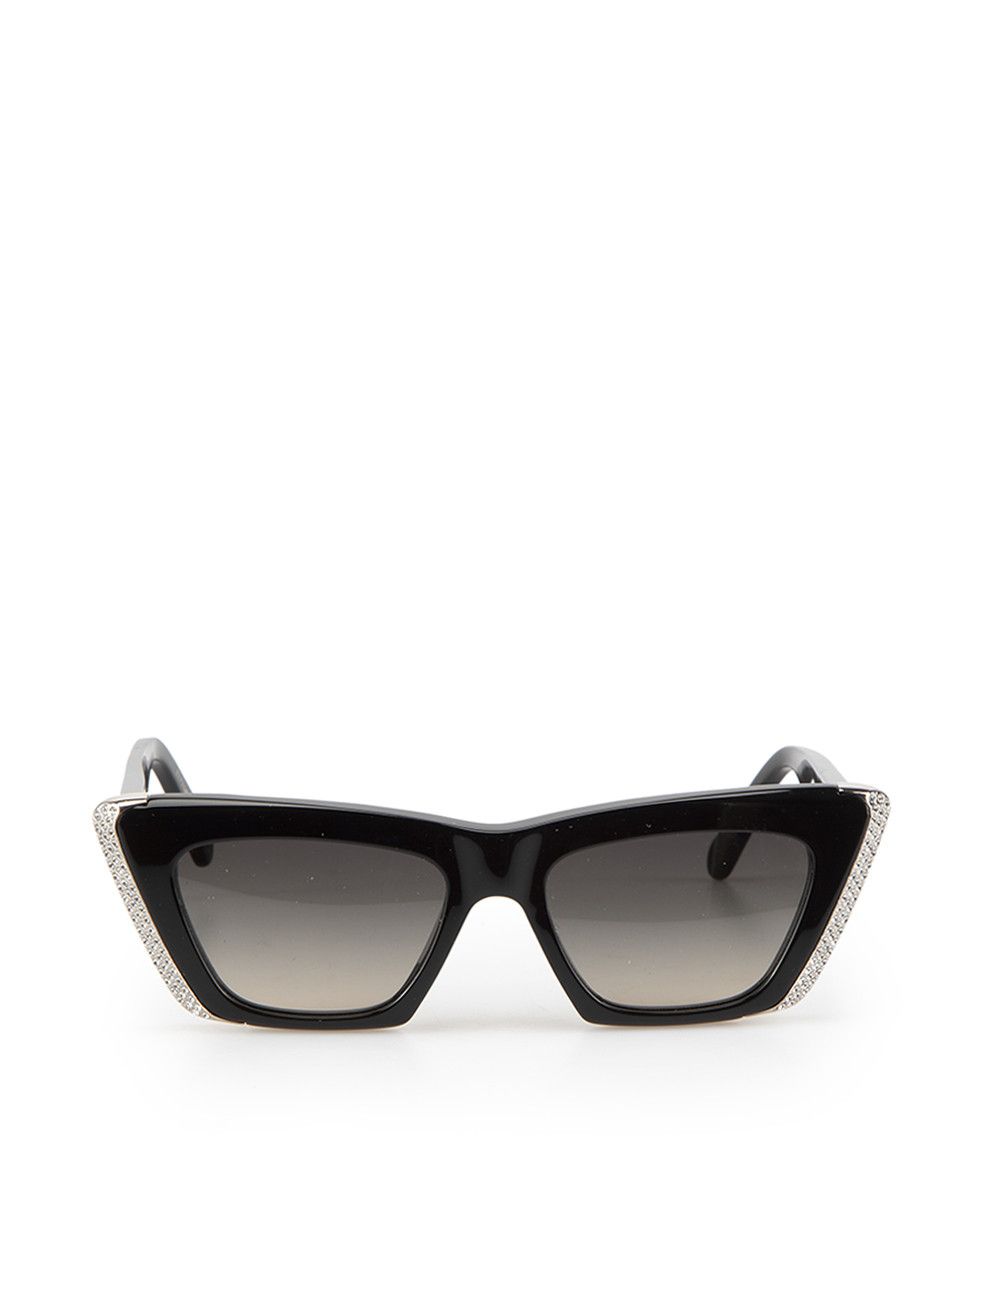 AUTHENTIC Louis Vuitton Sunglasses M92409 Cat Eye Sunglasses - Preowned